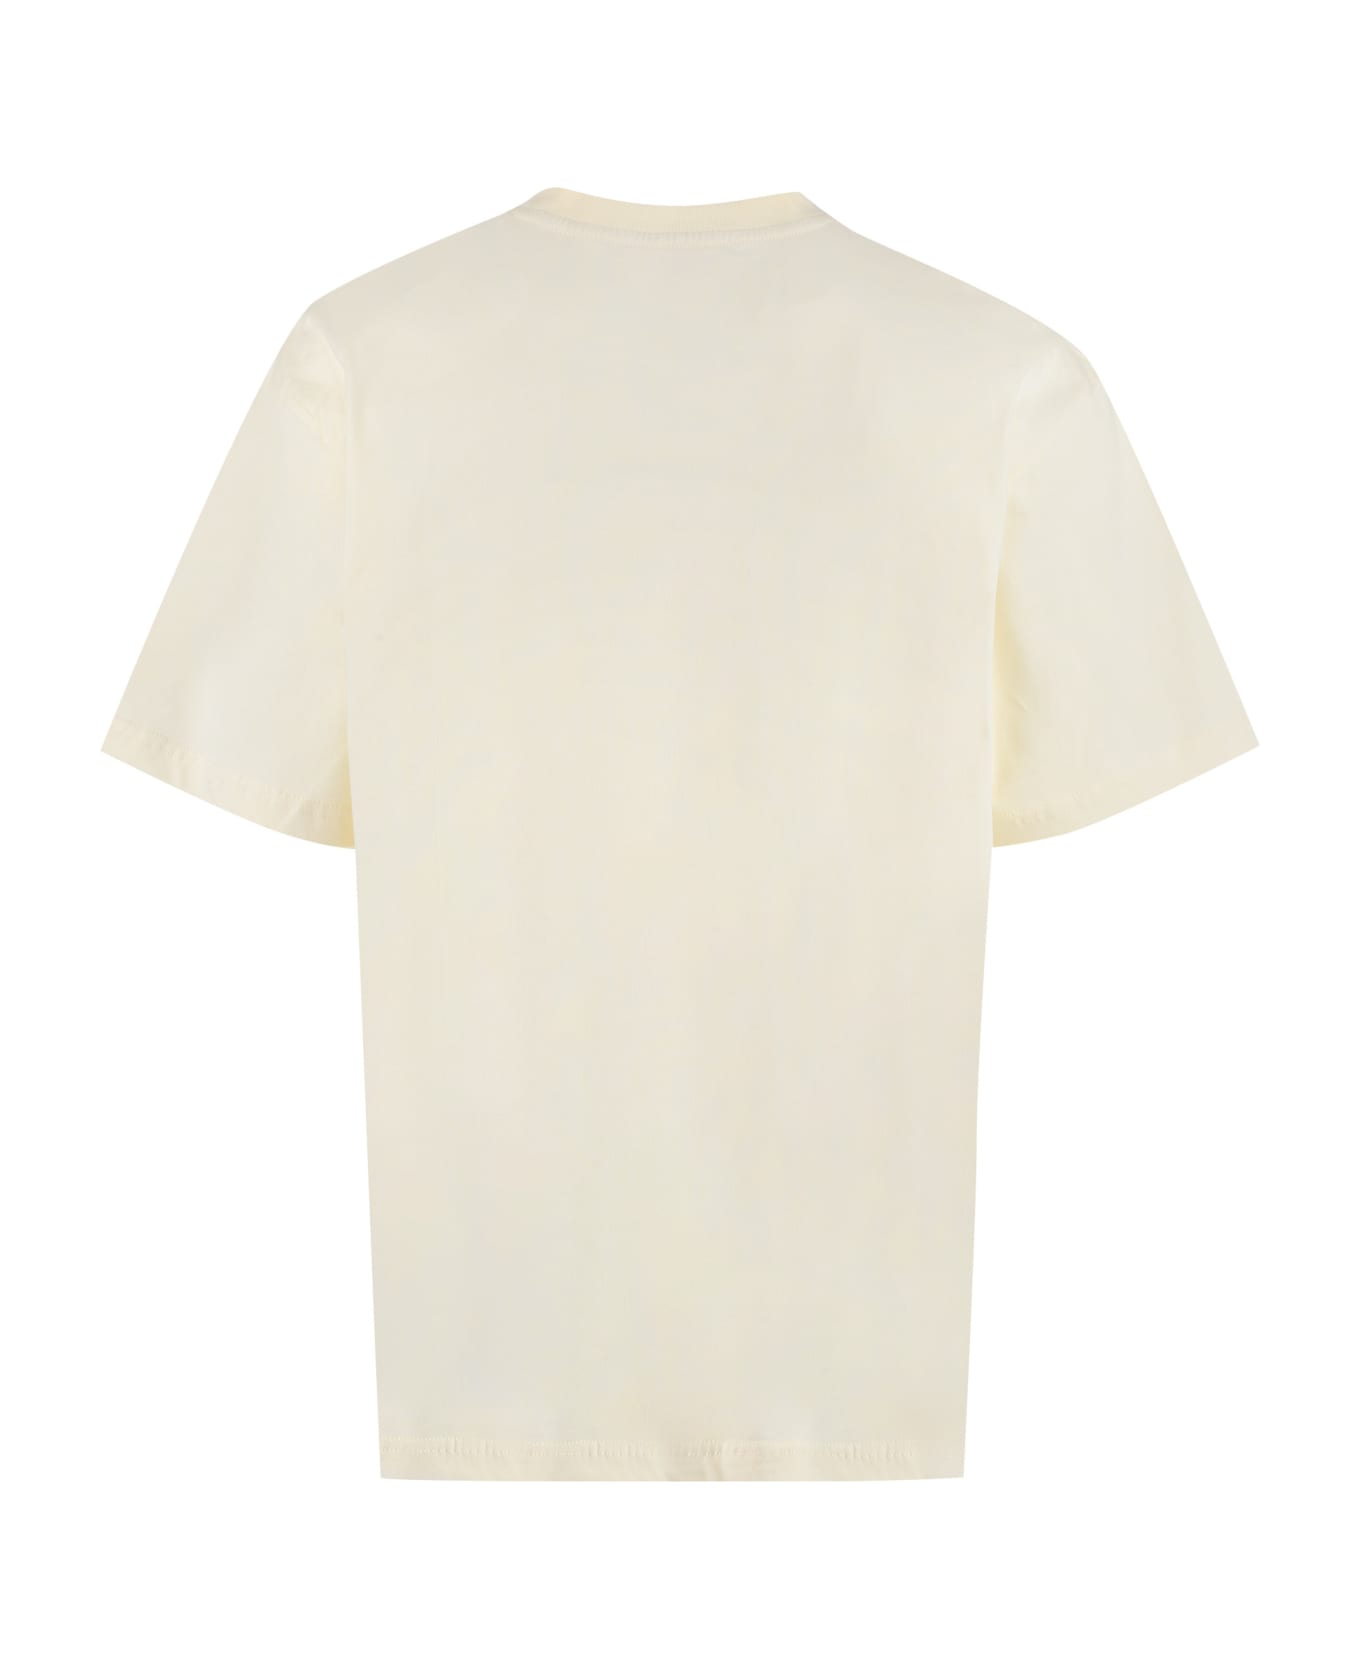 Market Printed Cotton T-shirt - panna シャツ